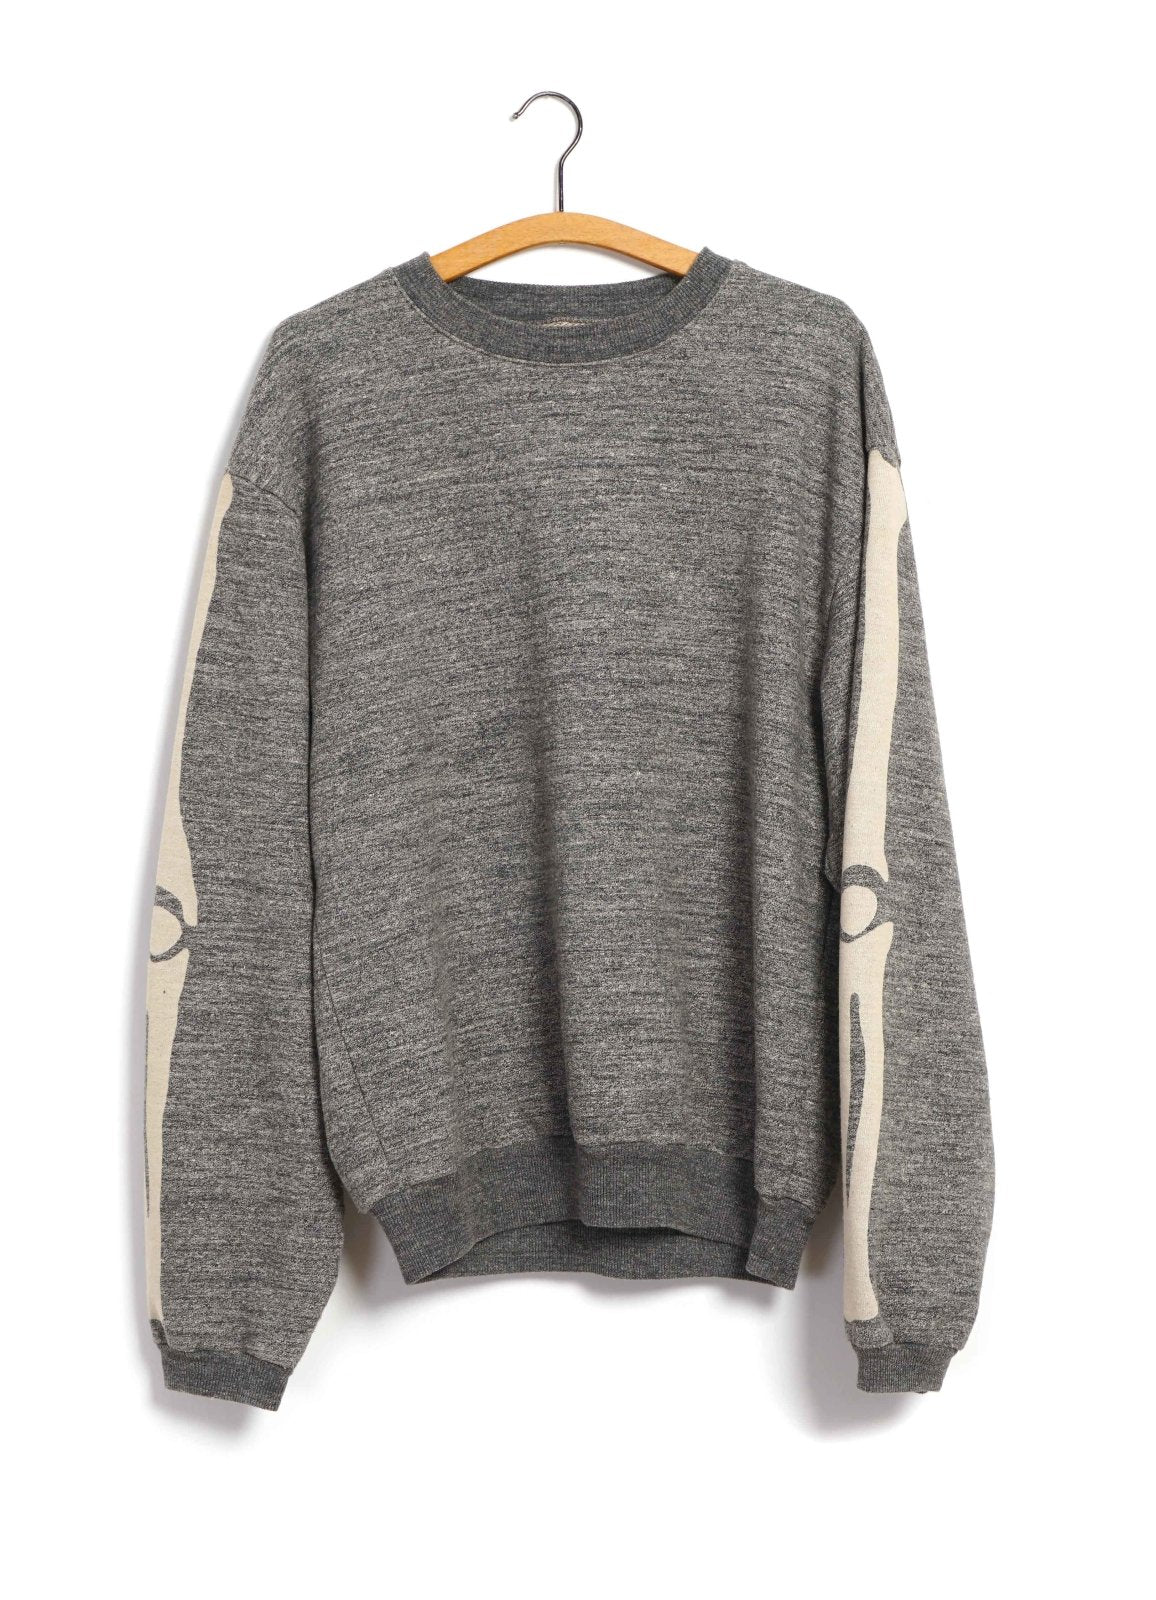 KAPITAL - BONE JERSEY | Grandrelle Crewneck Sweatshirt | Charcoal - HANSEN Garments